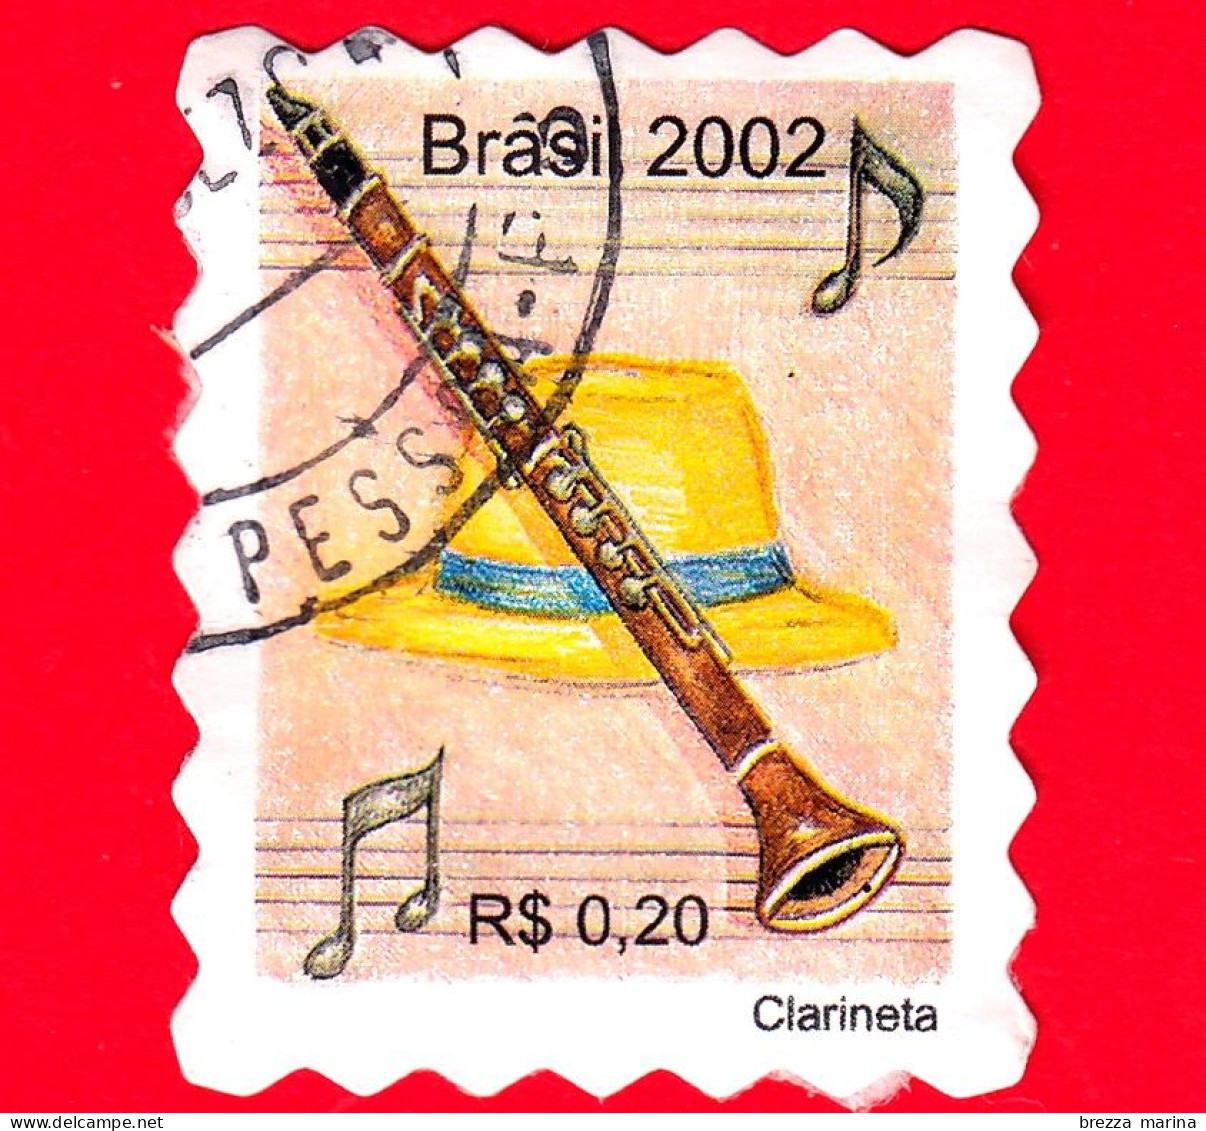 BRASILE - Usato - 2002 - Strumenti Musicali - Clarinetto - Clarineta  - 0.20 - Used Stamps